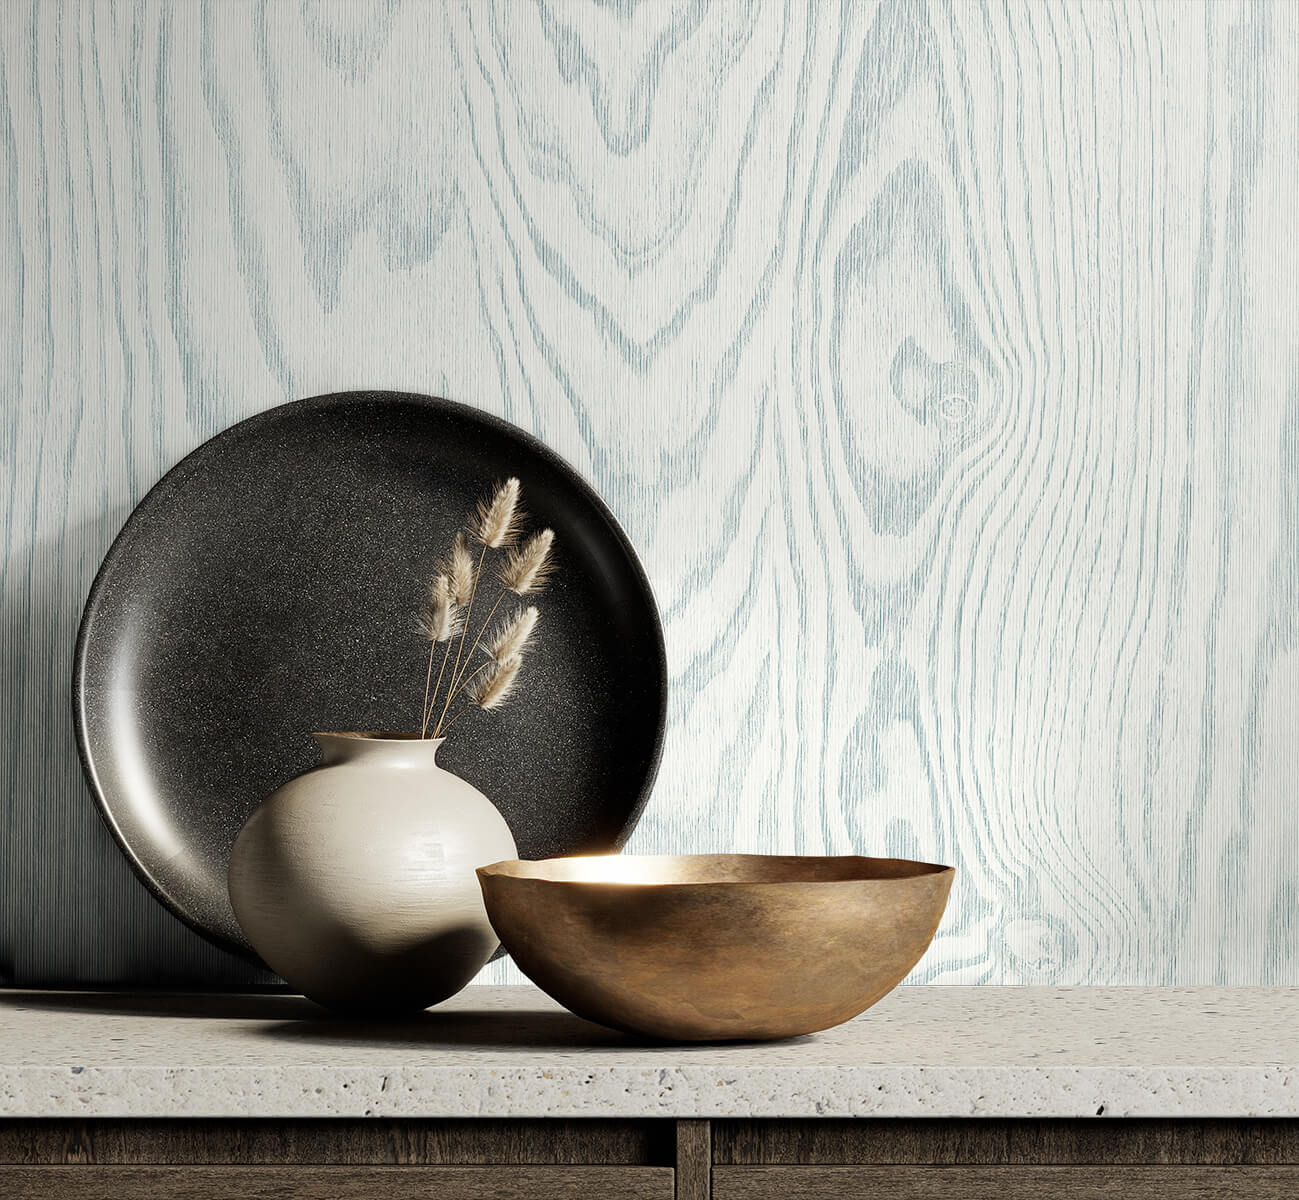 Seabrook White Heron Kyoto Faux Woodgrain Wallpaper - Soft Blue